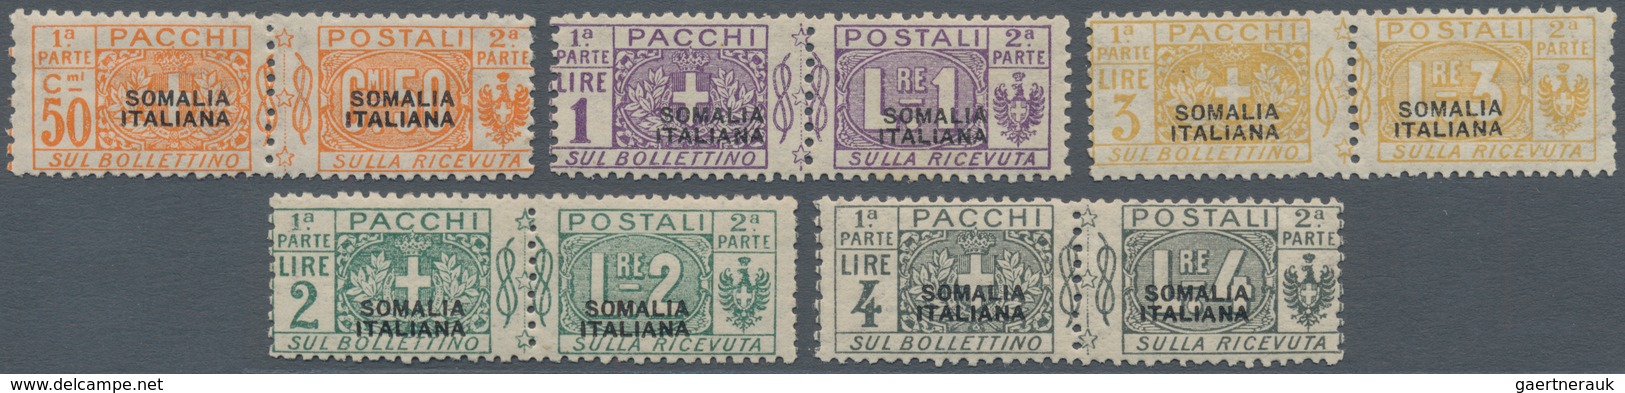 01065 Italienisch-Somaliland - Paketmarken: 1923, "SOMALIA ITALIANA" Overprint On 50c. To 4l., Not Issued, - Somalie